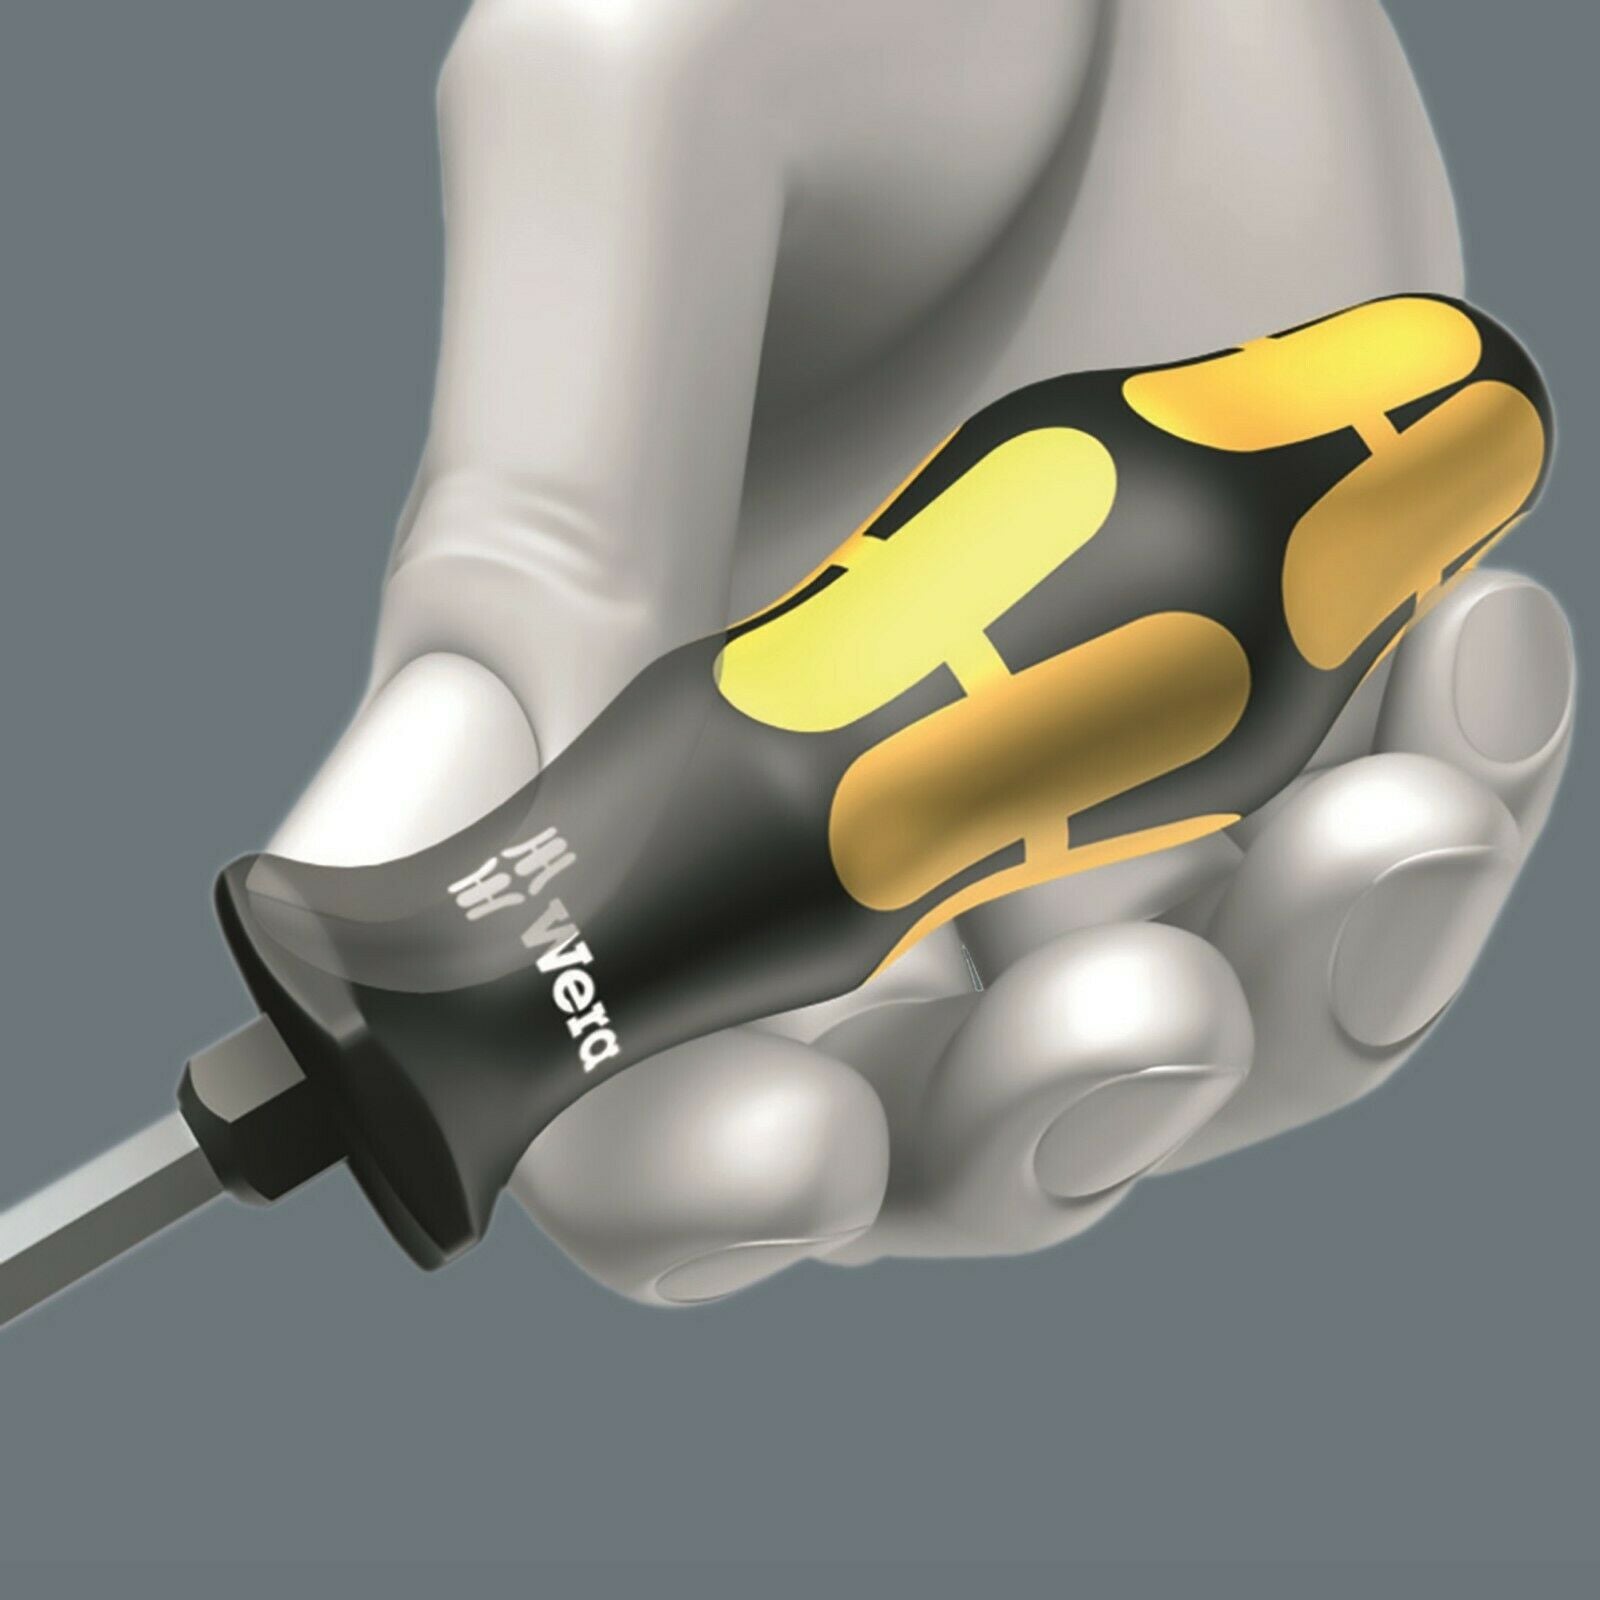 wera 932/ s/6 kraftform chiseldriver screwdriver set with rack 05018283001